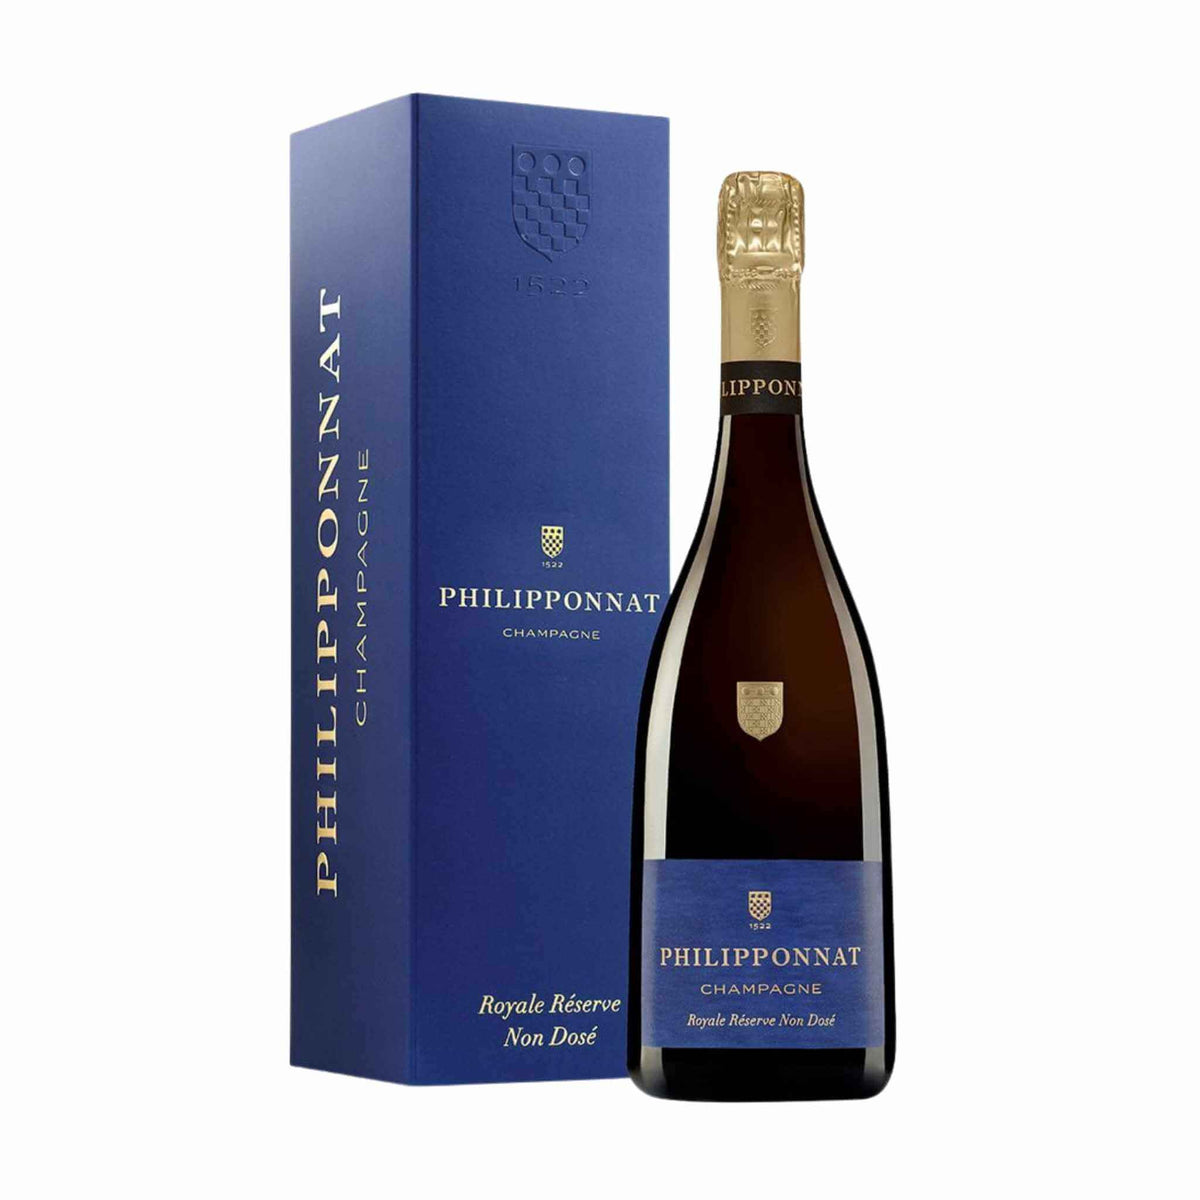 Philipponnat-Champagner-Pinot Noir, Chardonnay, Pinot Meunier-Royale Reserve Non Dose im GK-WINECOM